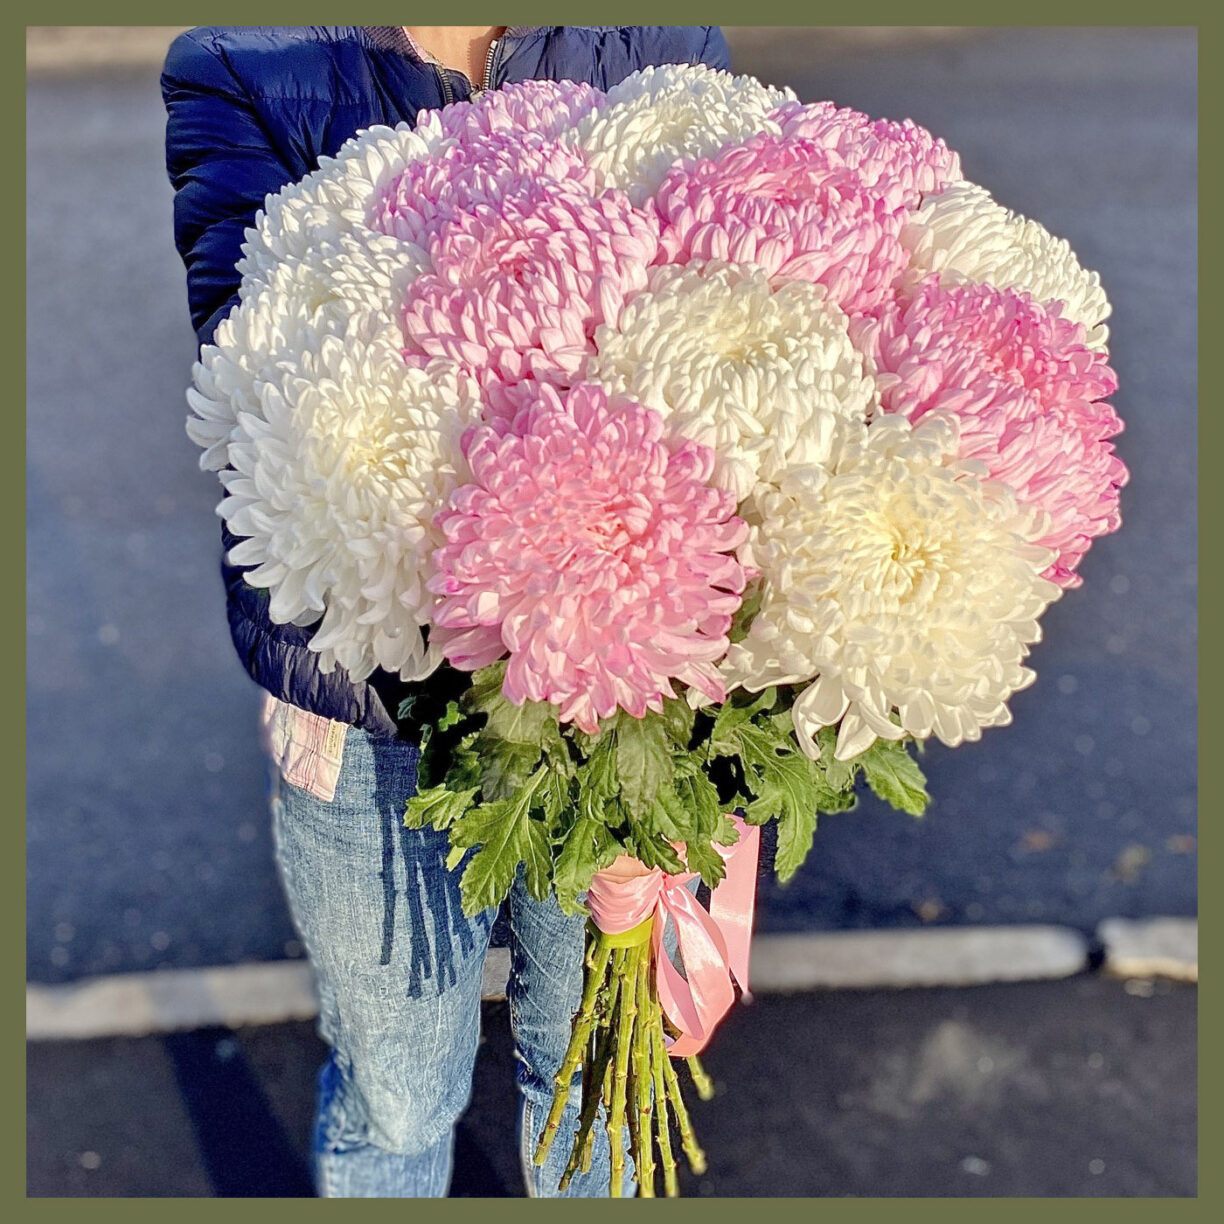 Сhrysanthemum Flower Messages: The Sentiments Behind Each Bouquet